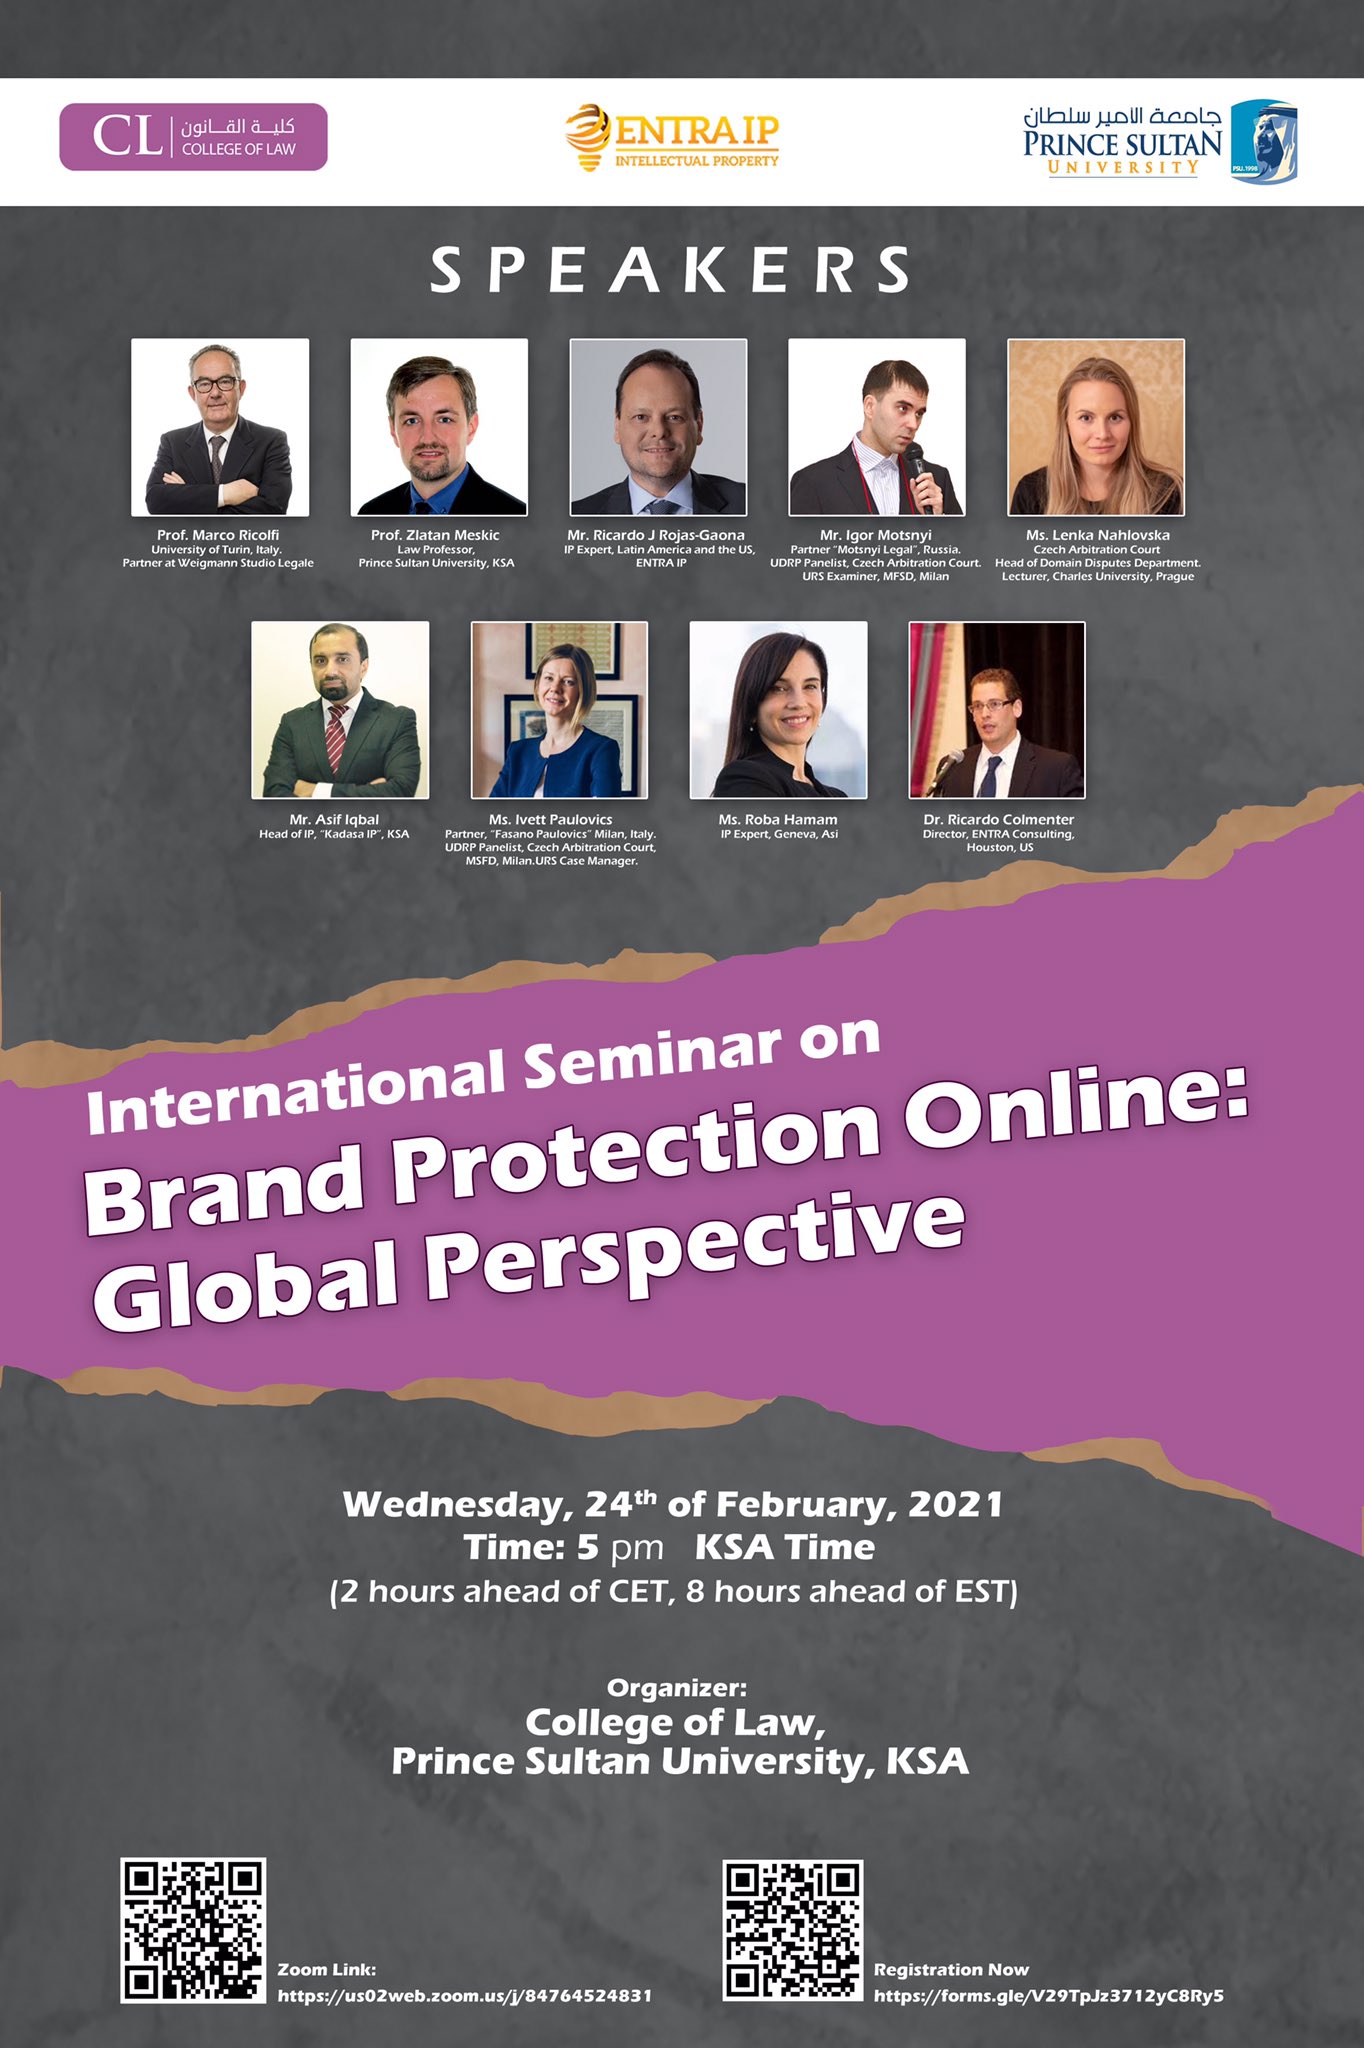 1st international webinar “Brand Protection Online: Global Perspective”